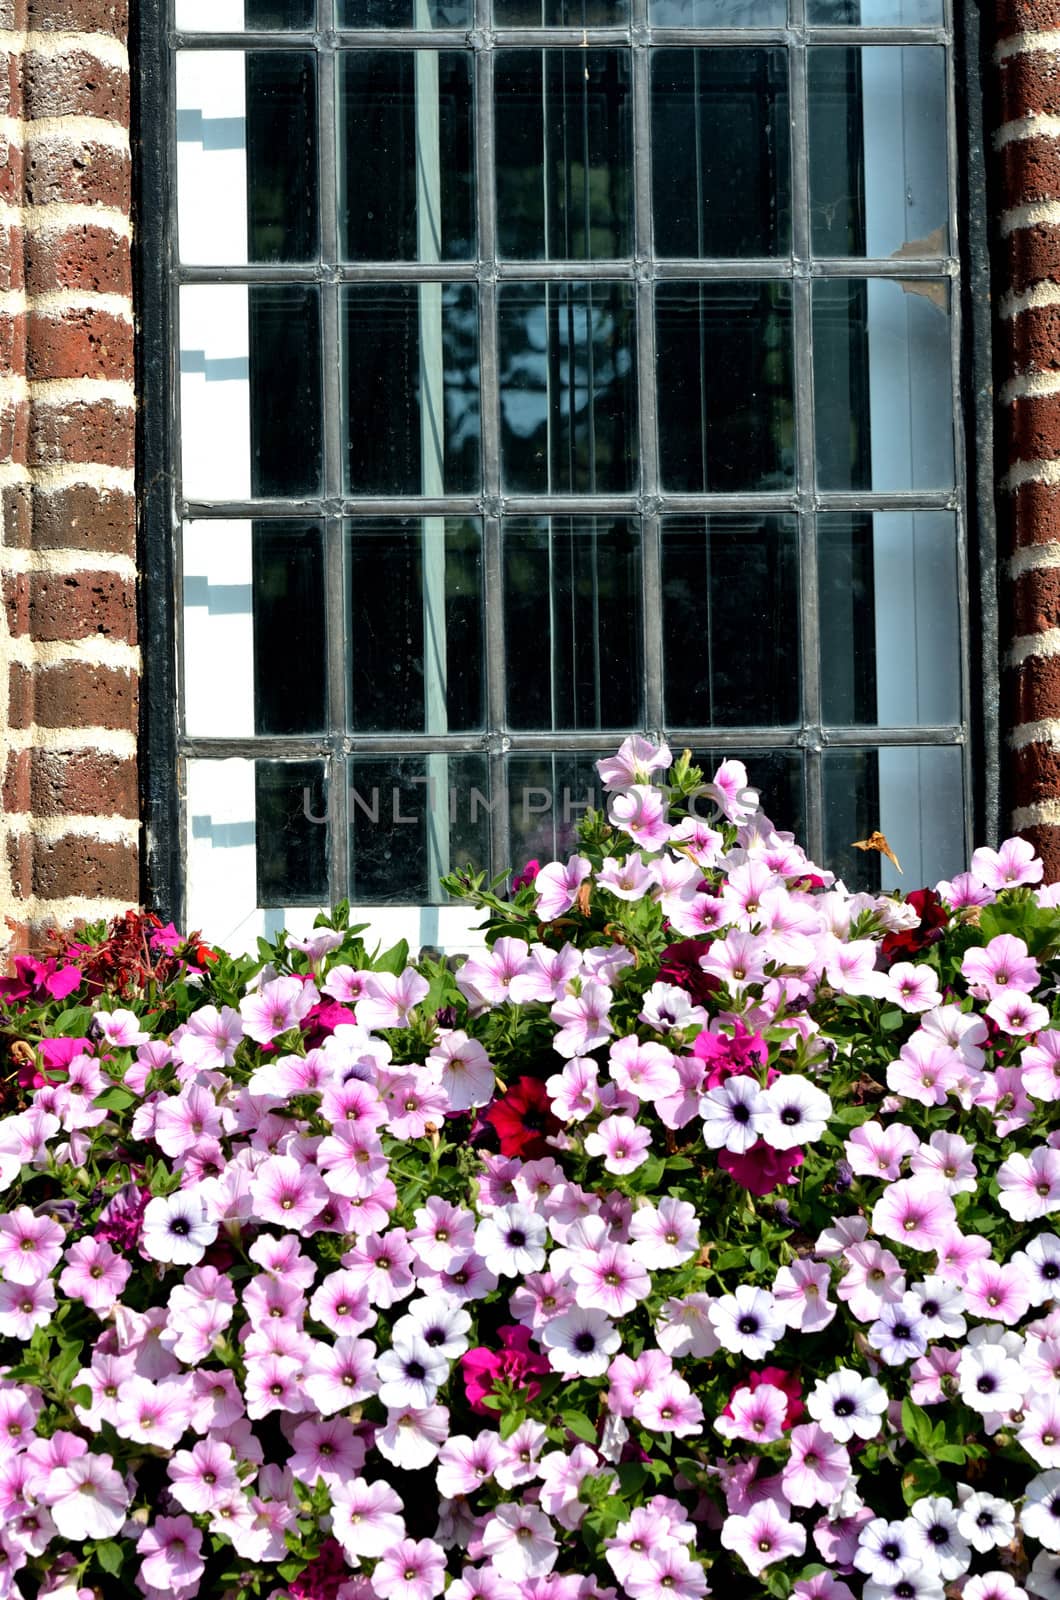 Flowers with window